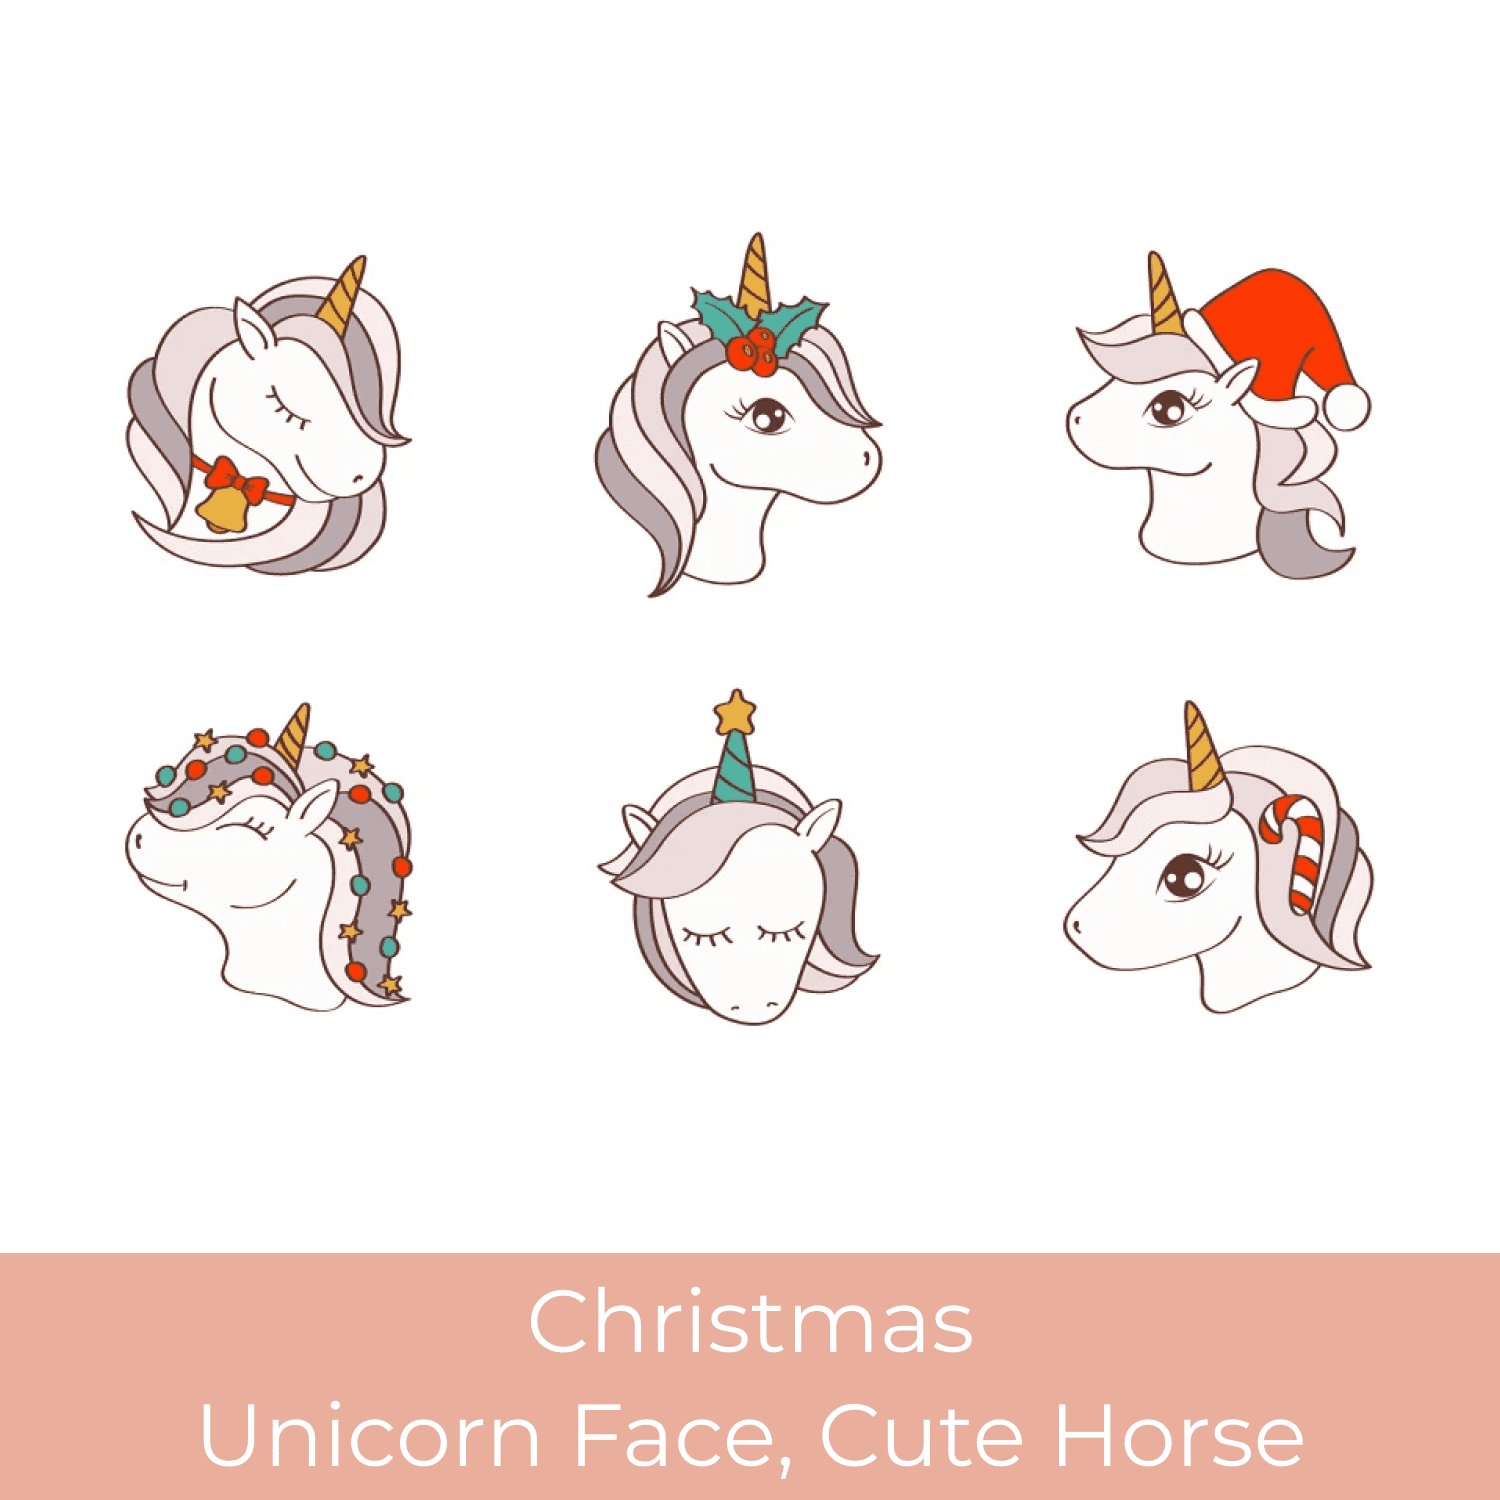 Christmas Unicorn Face, Cute Horse cover.